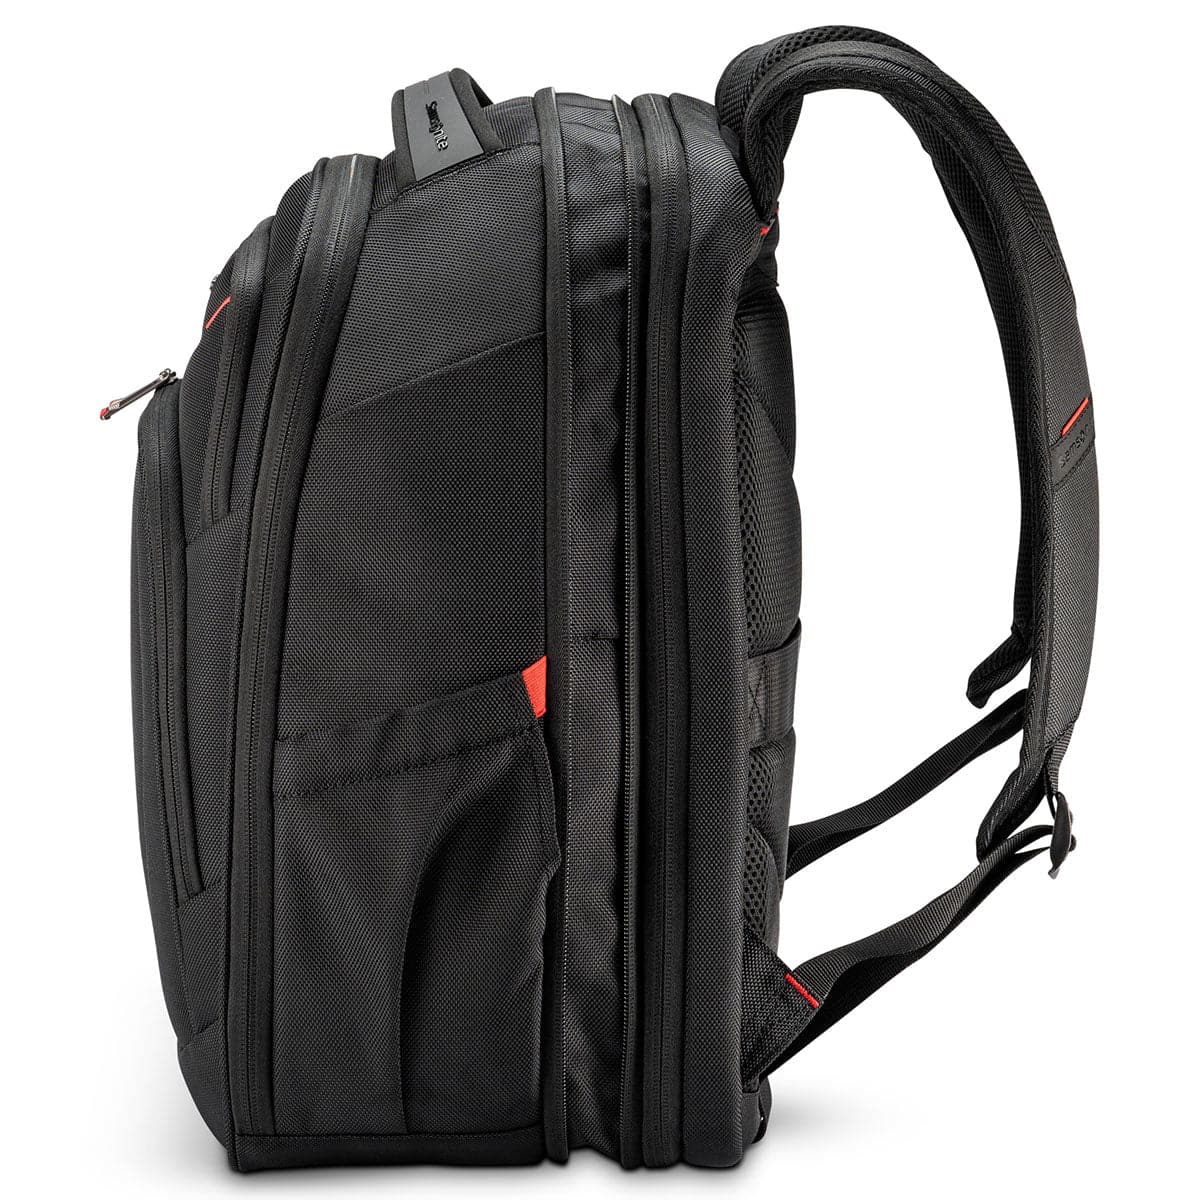 Samsonite Xenon 4.0 Large Expandable Backpack